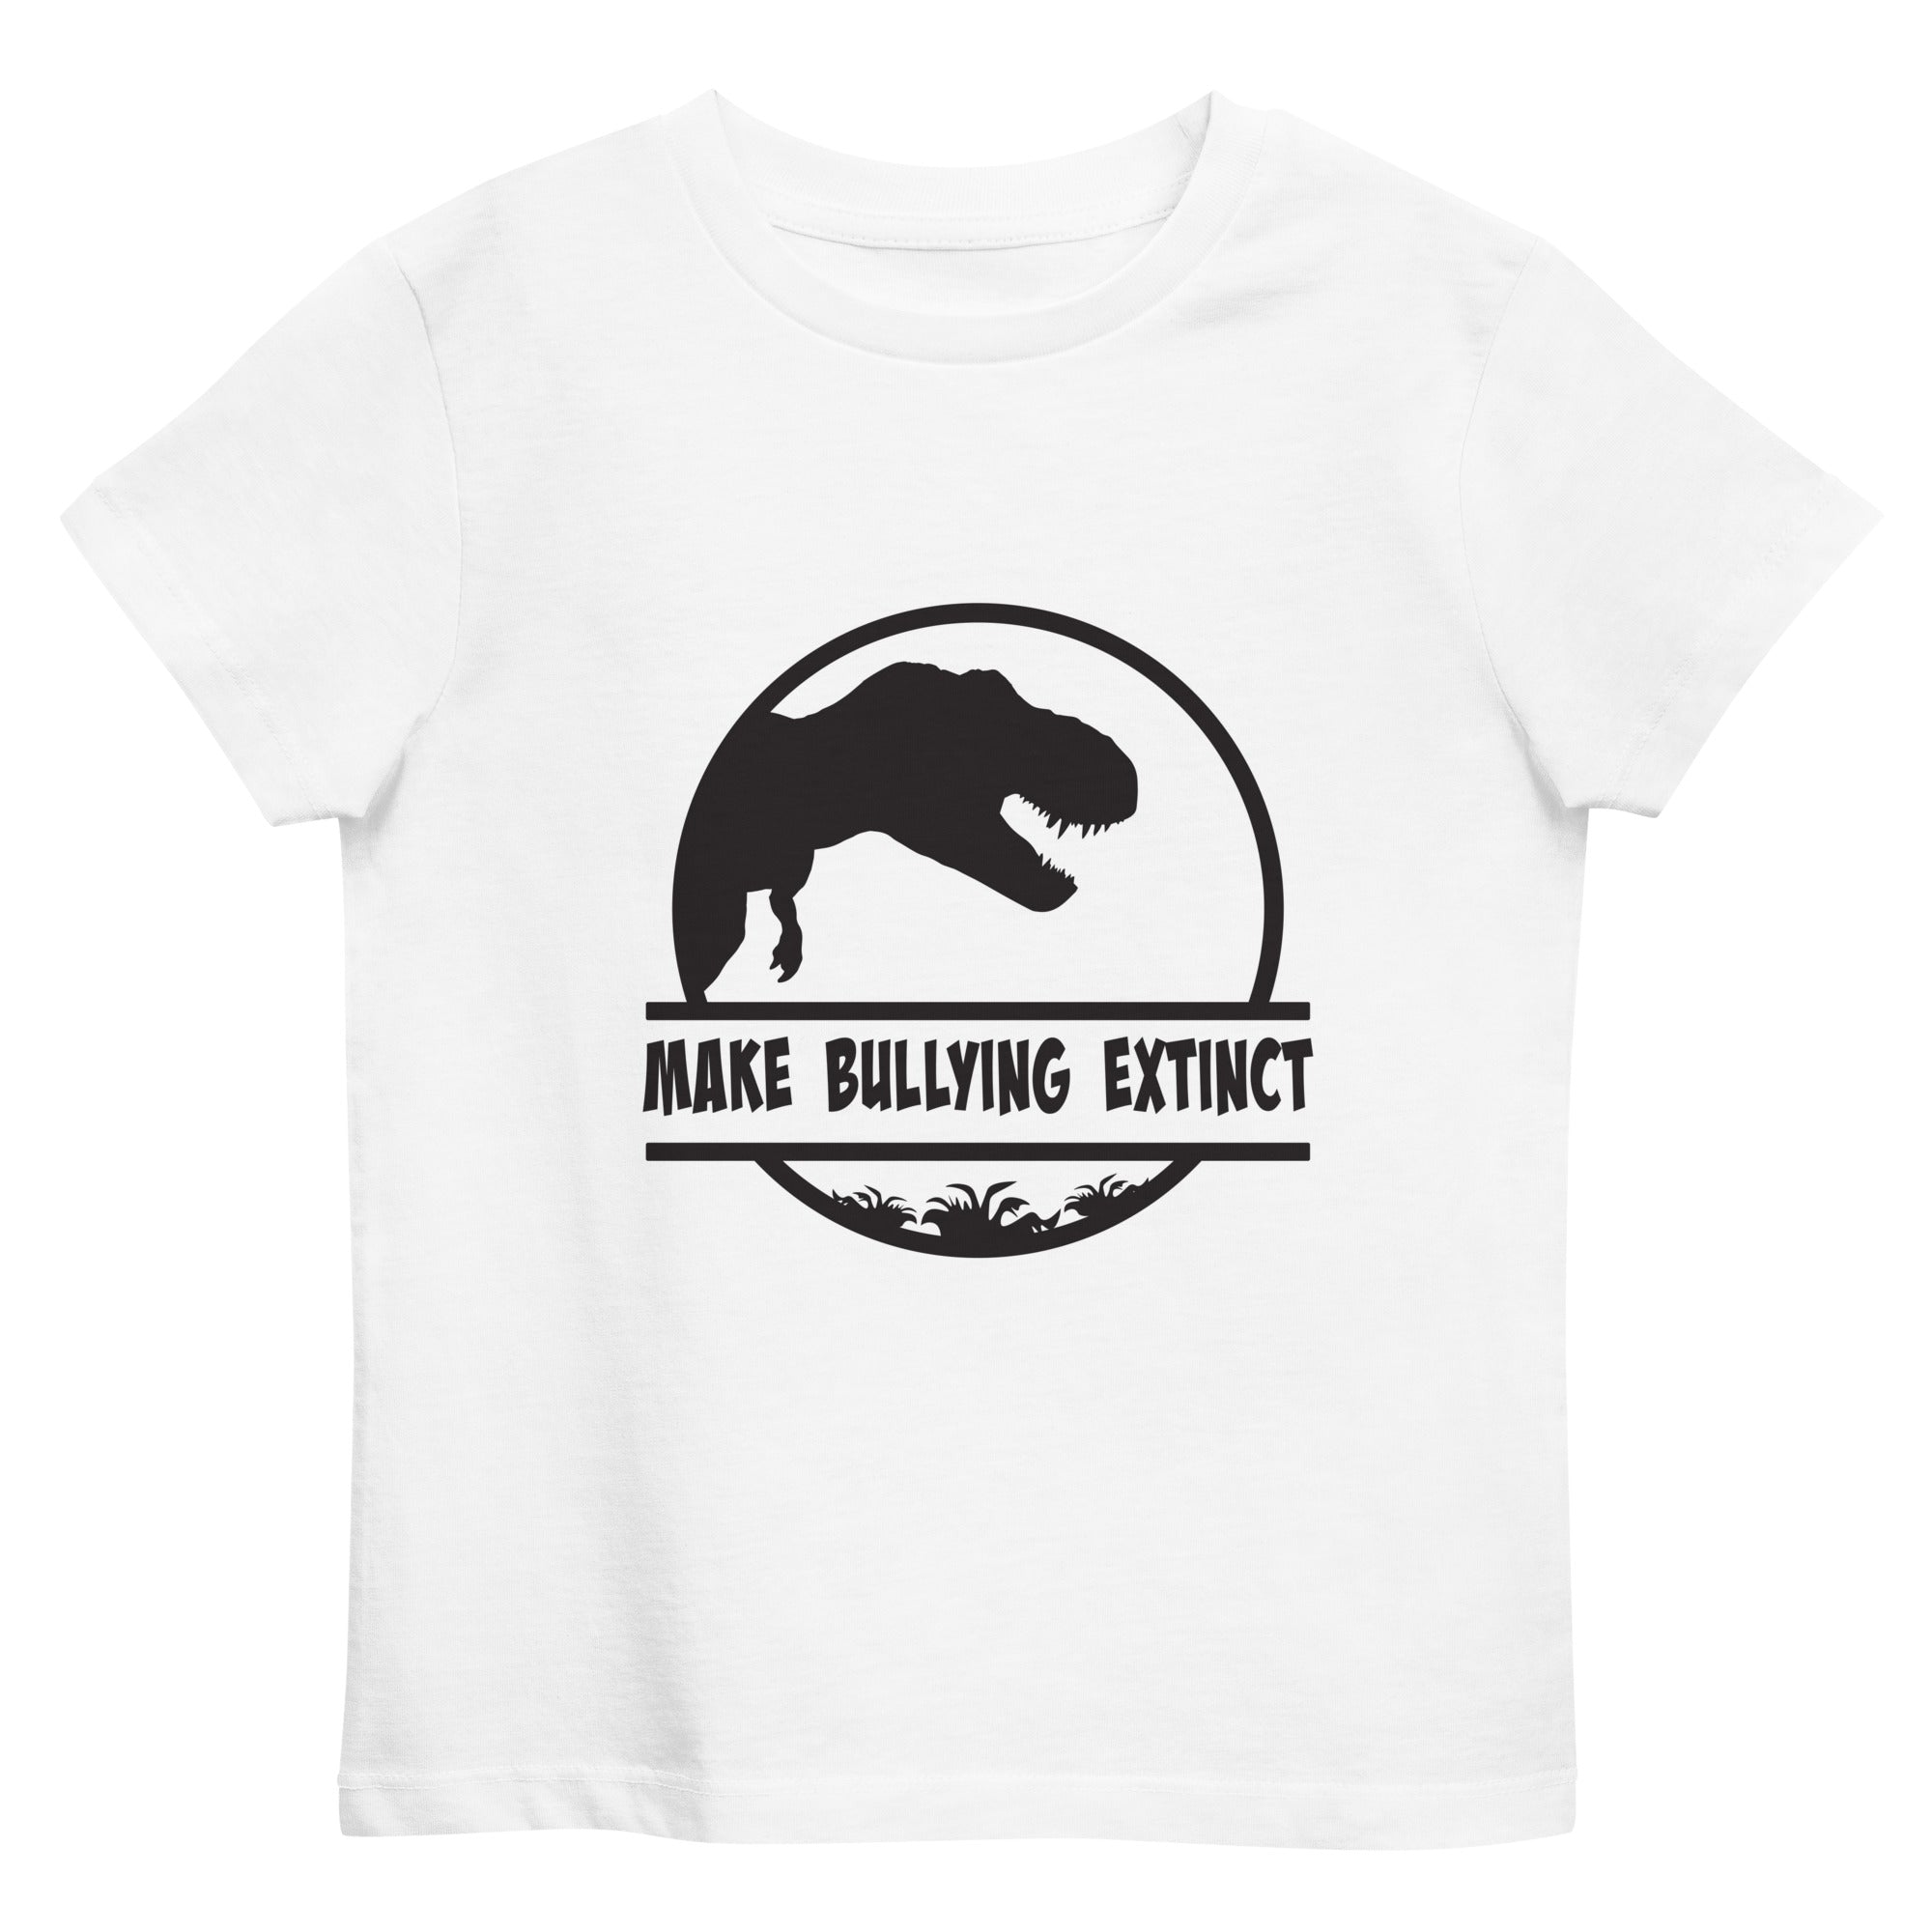 Make Bullying Extinct [White] Organic Cotton Kids T-shirt